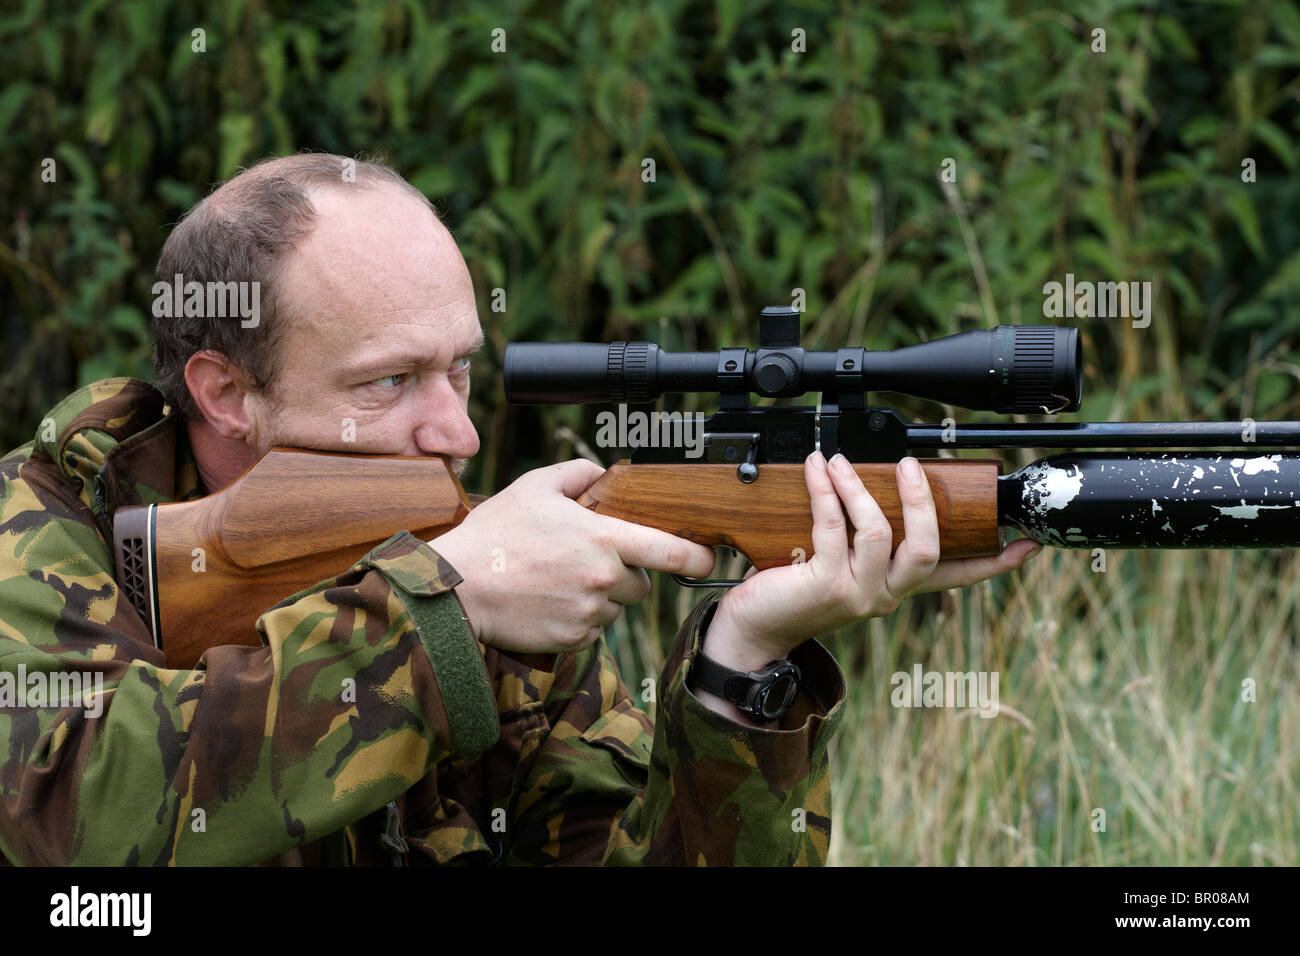 Man shooting air rifle Stock Photo